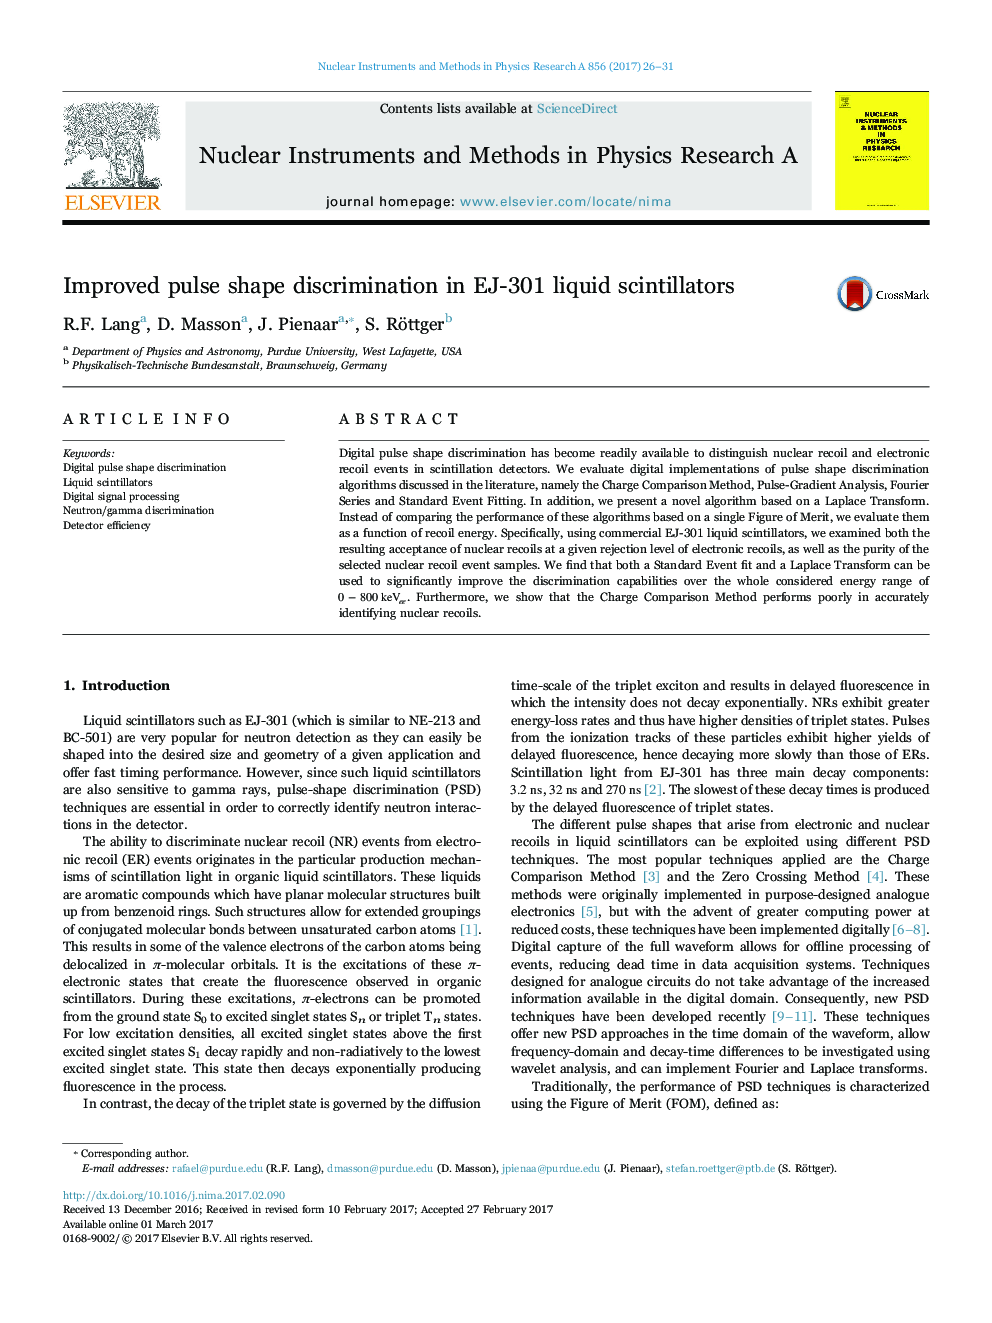 Improved pulse shape discrimination in EJ-301 liquid scintillators